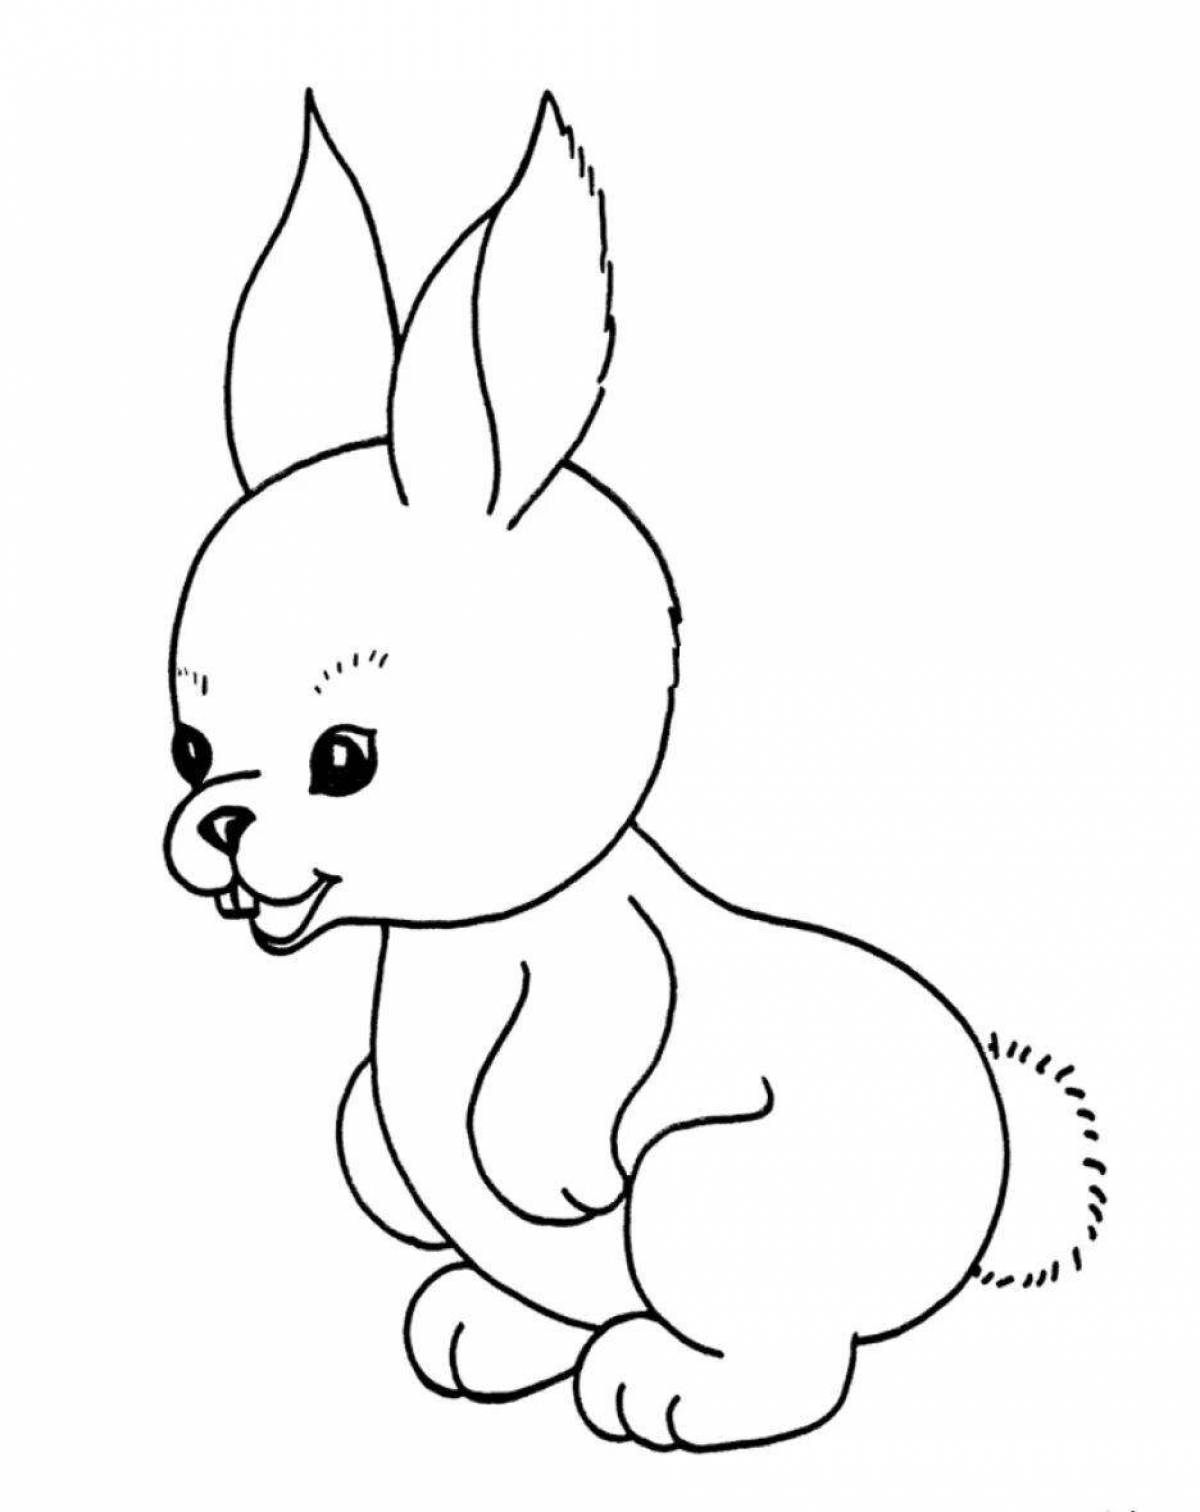 Charming coloring rabbit drawing